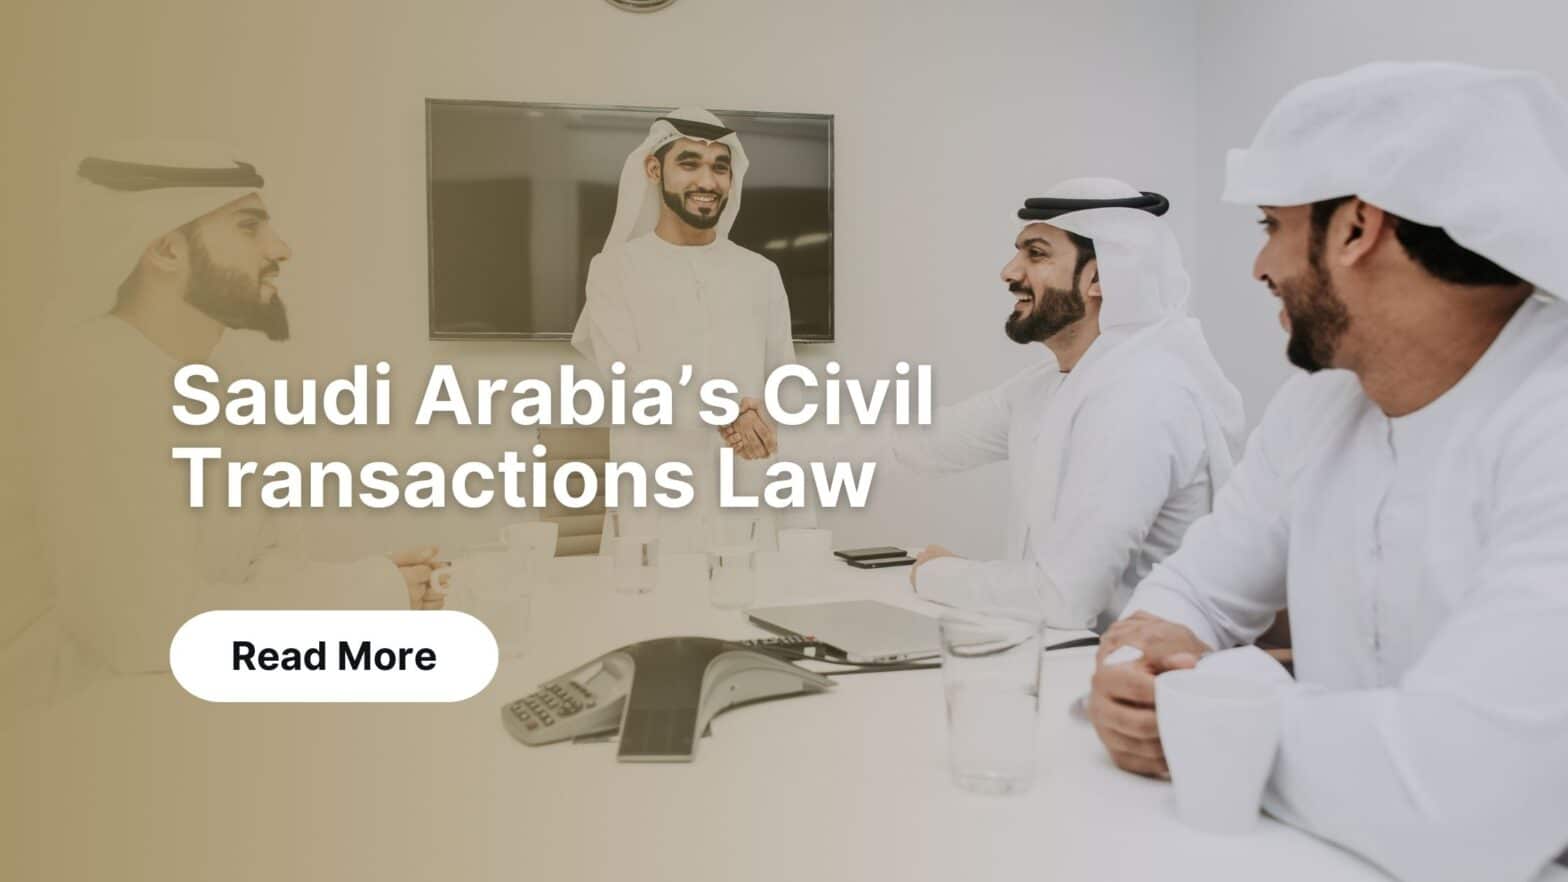 Saudi Arabia's Civil Transaction Law